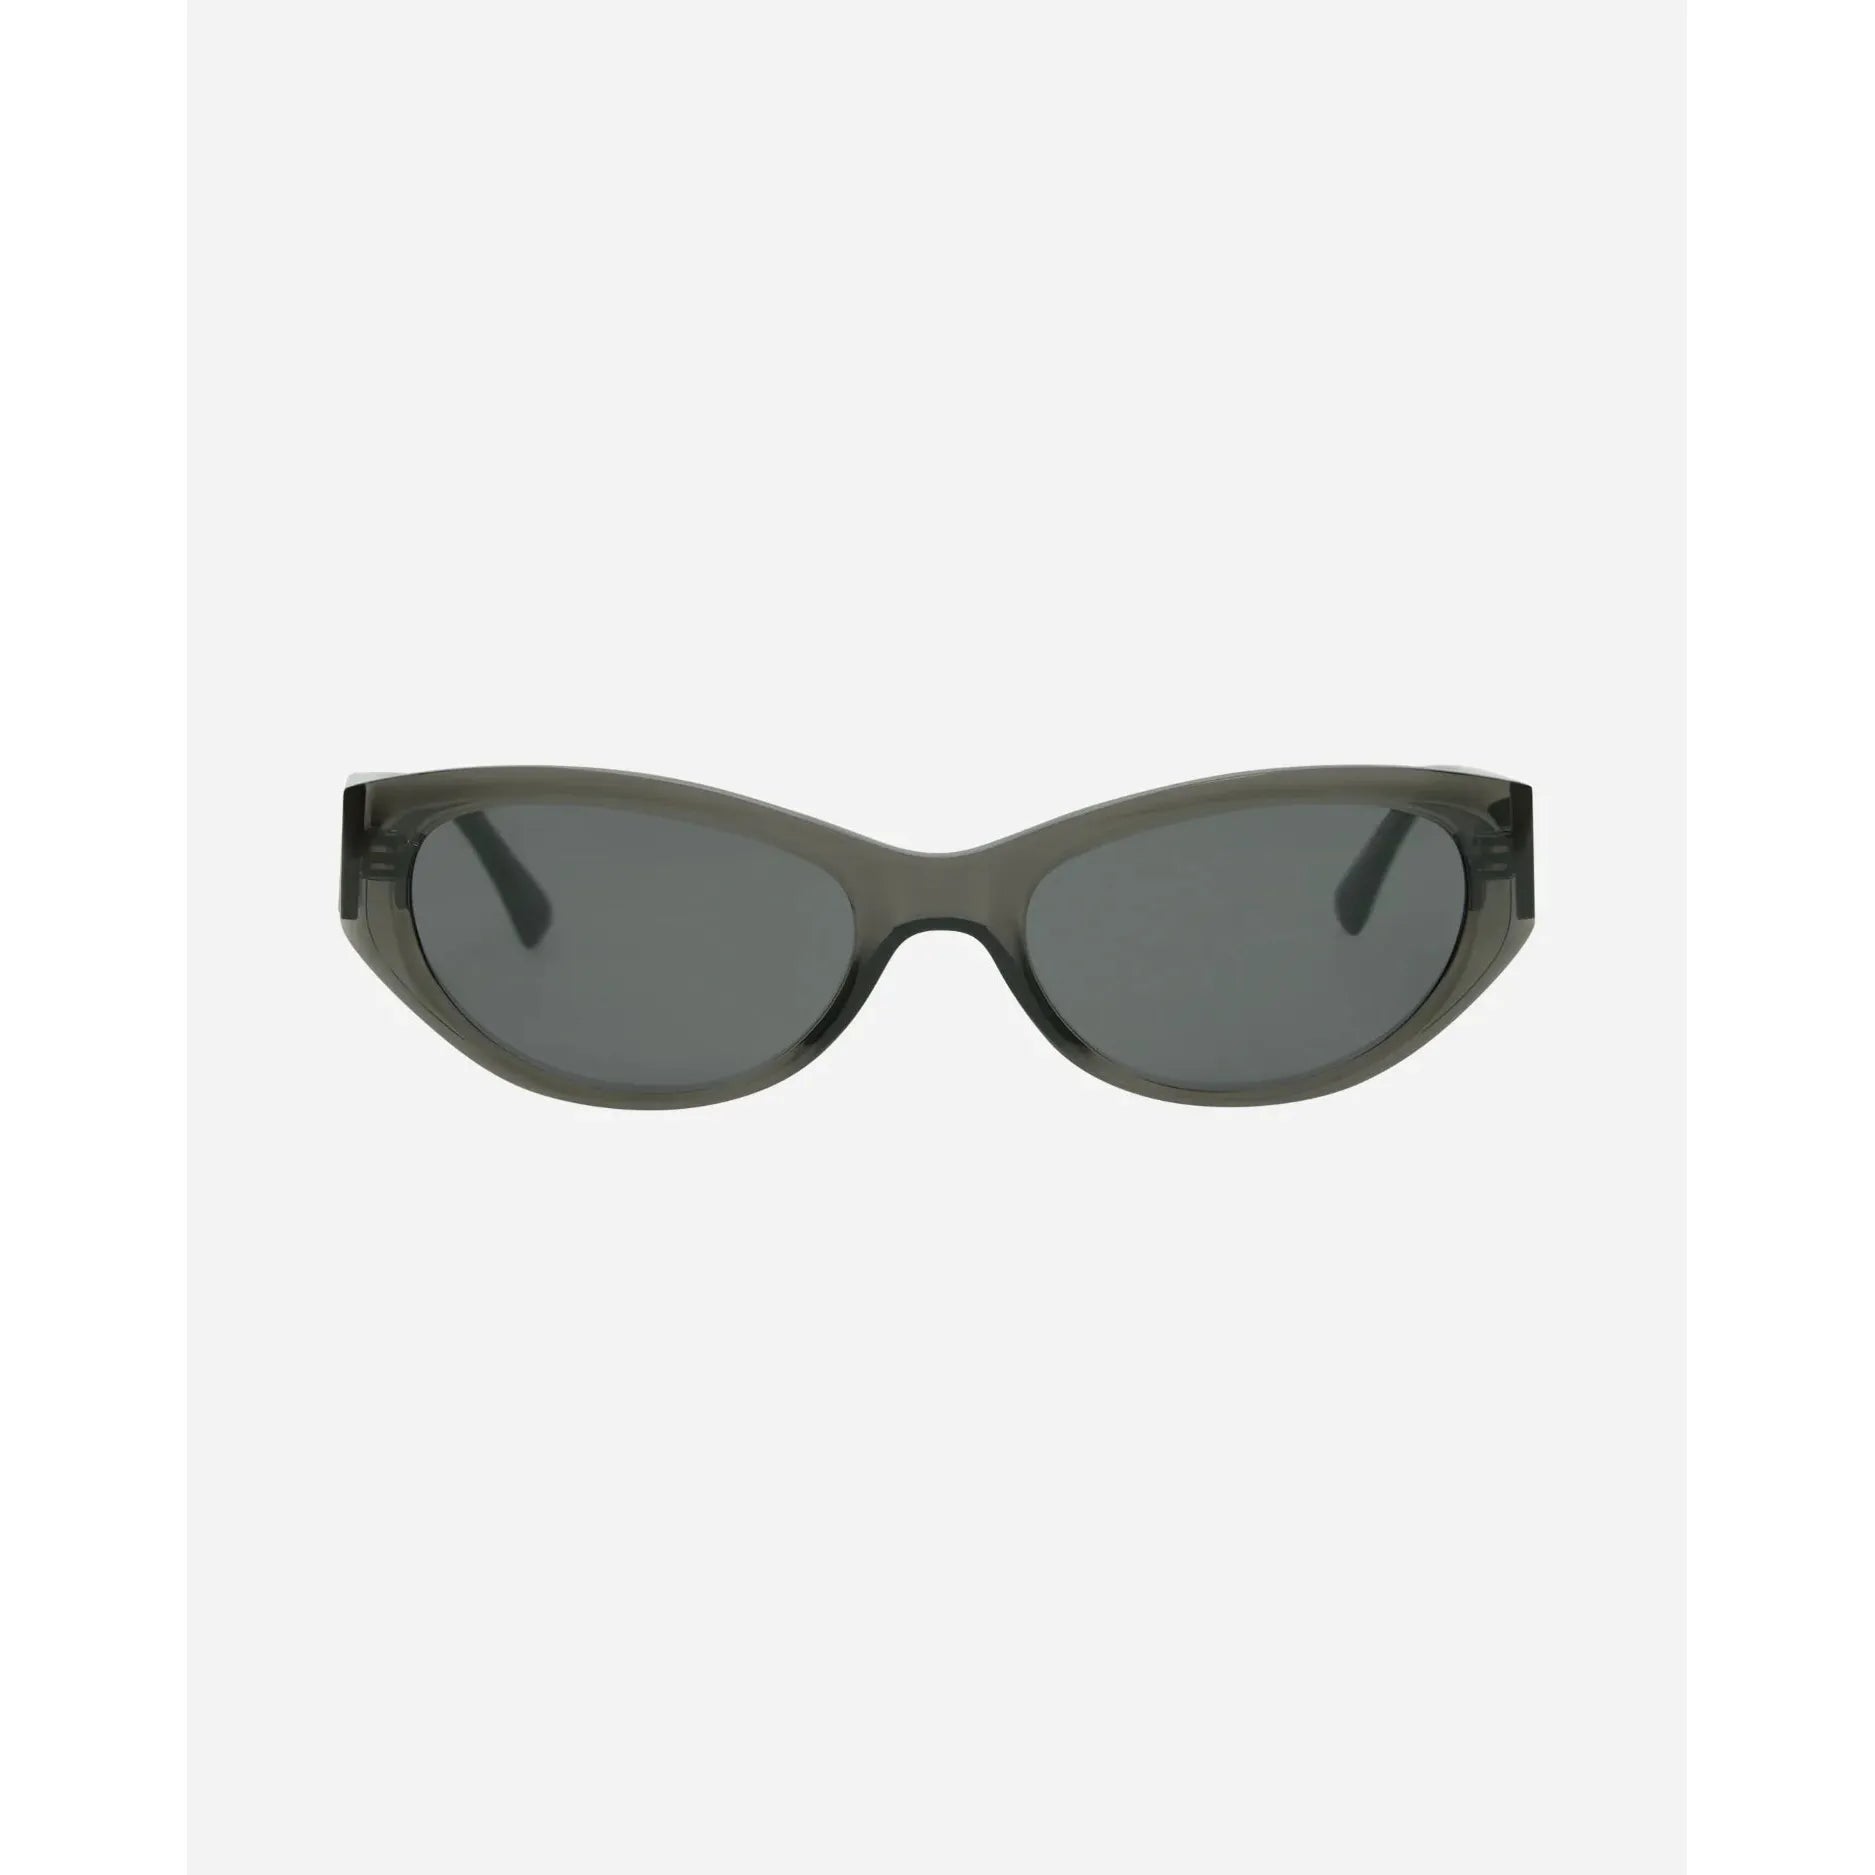 RAIE Riley (Oval) Sunglasses - Smoke